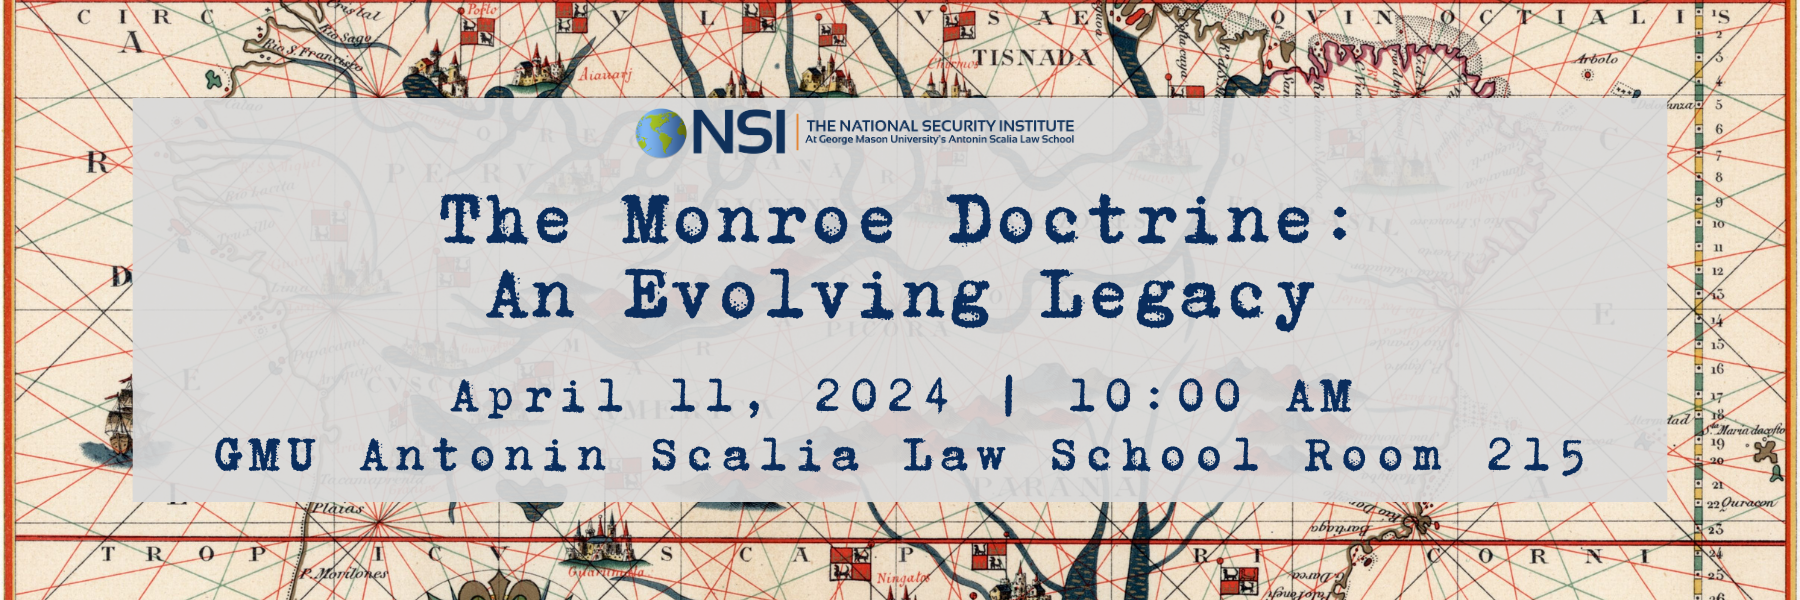 The Monroe Doctrine: An Evolving Legacy